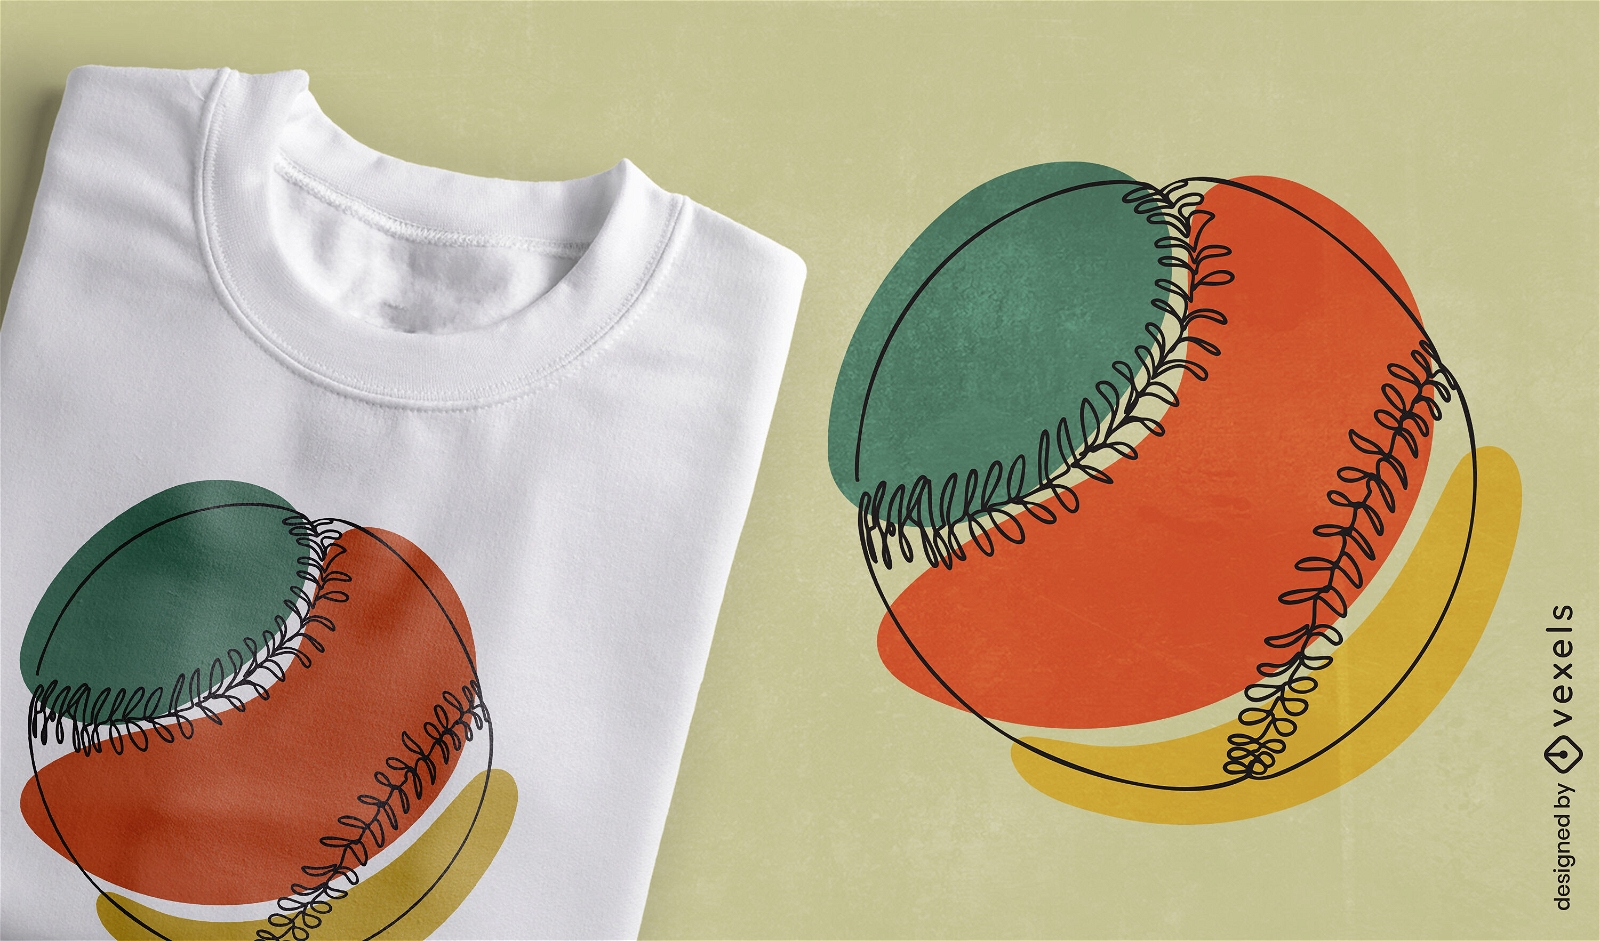 Diseño de camiseta de línea continua de pelota de béisbol.